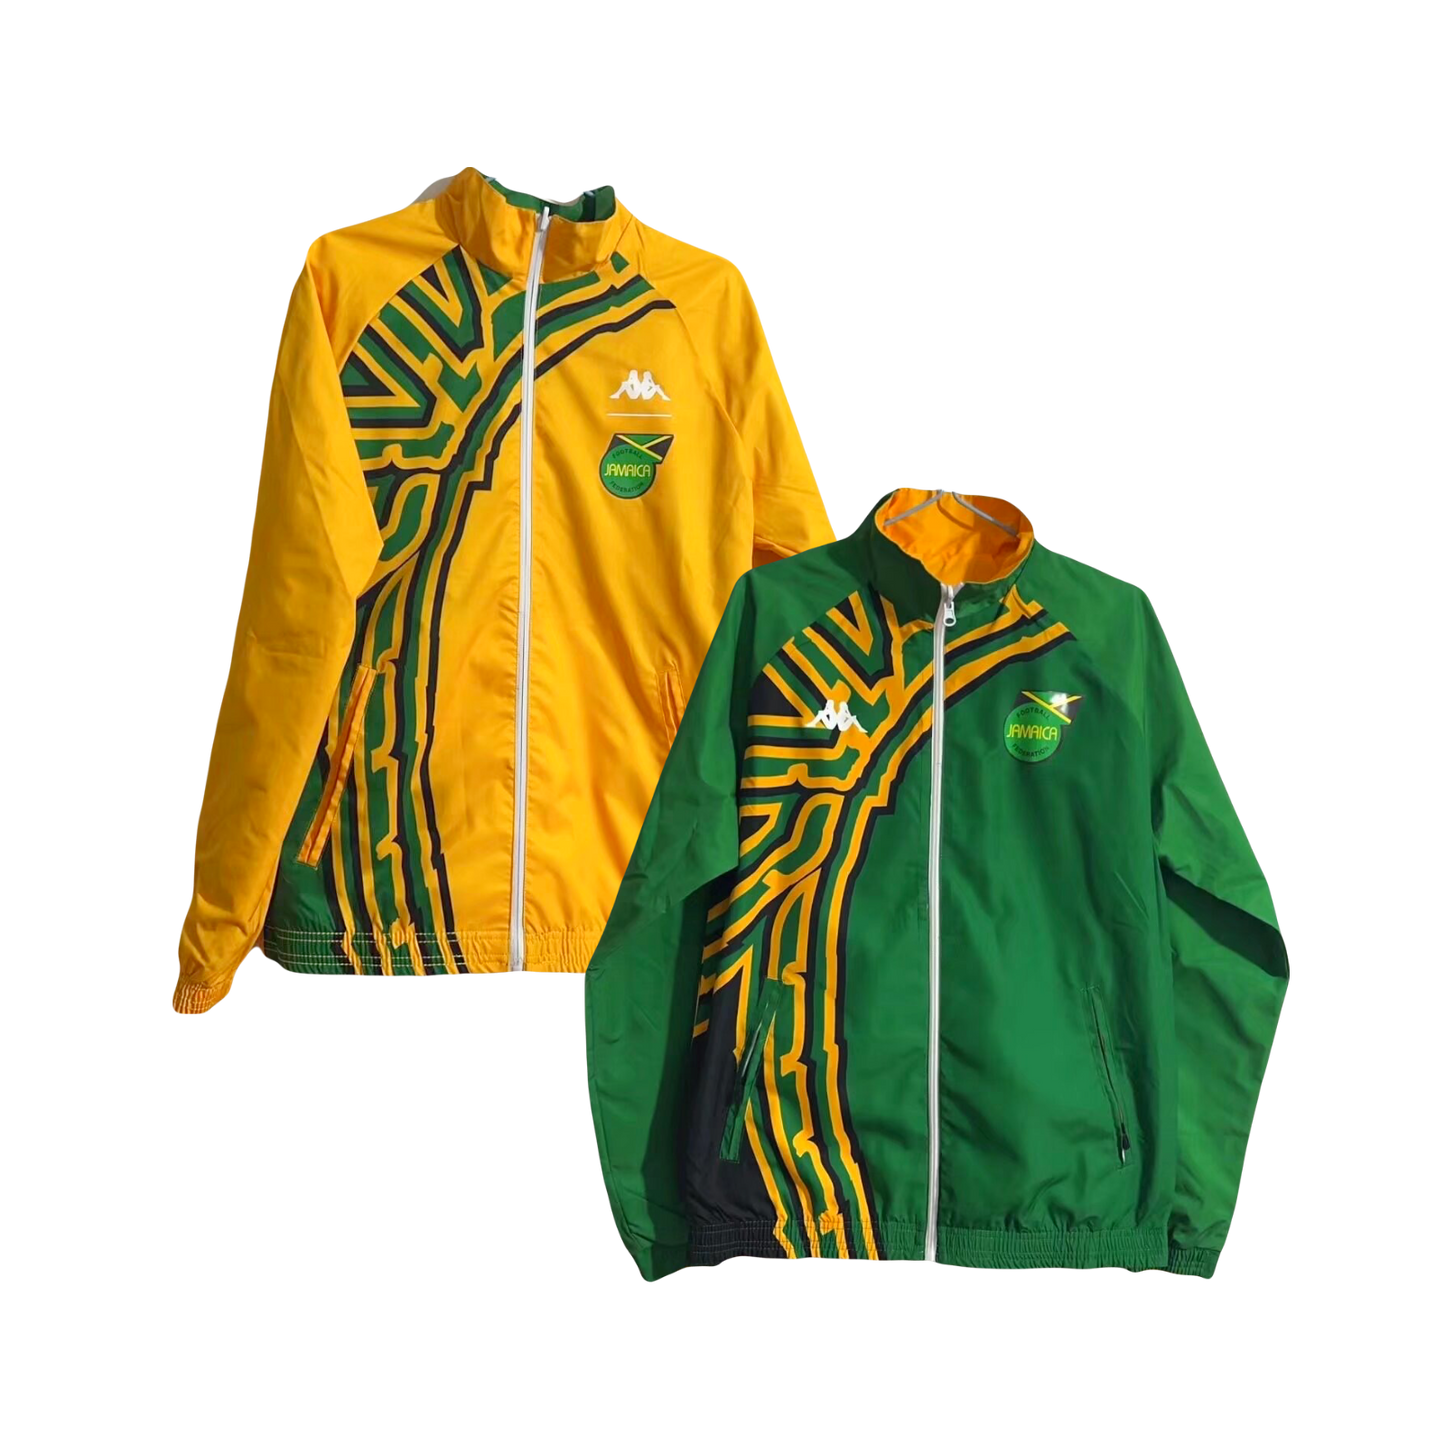 Jamaica National Team Kappa Revers-able Windbreaker Jacket - Green & Gold